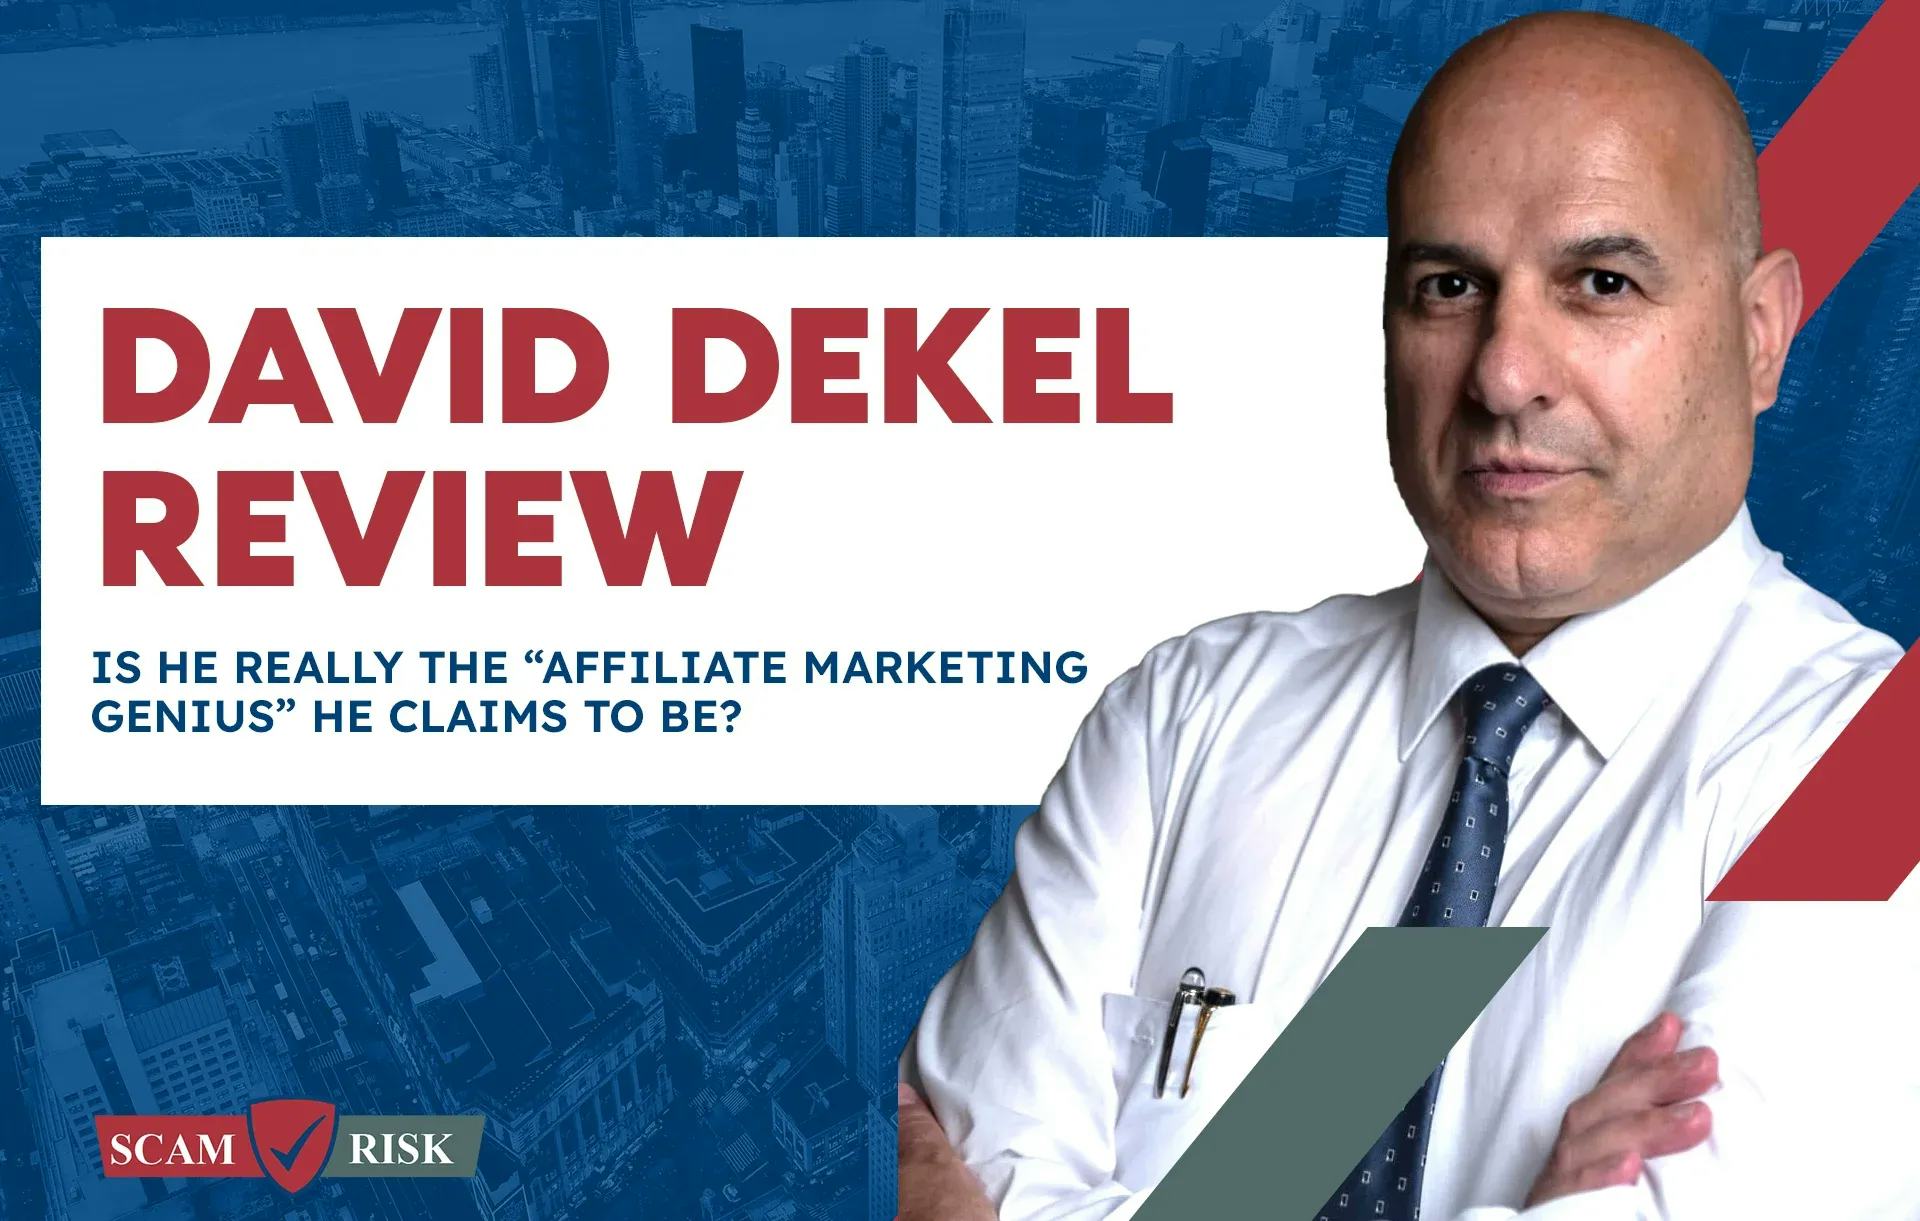 David Dekel Reviews: Best In Affiliate Marketing?